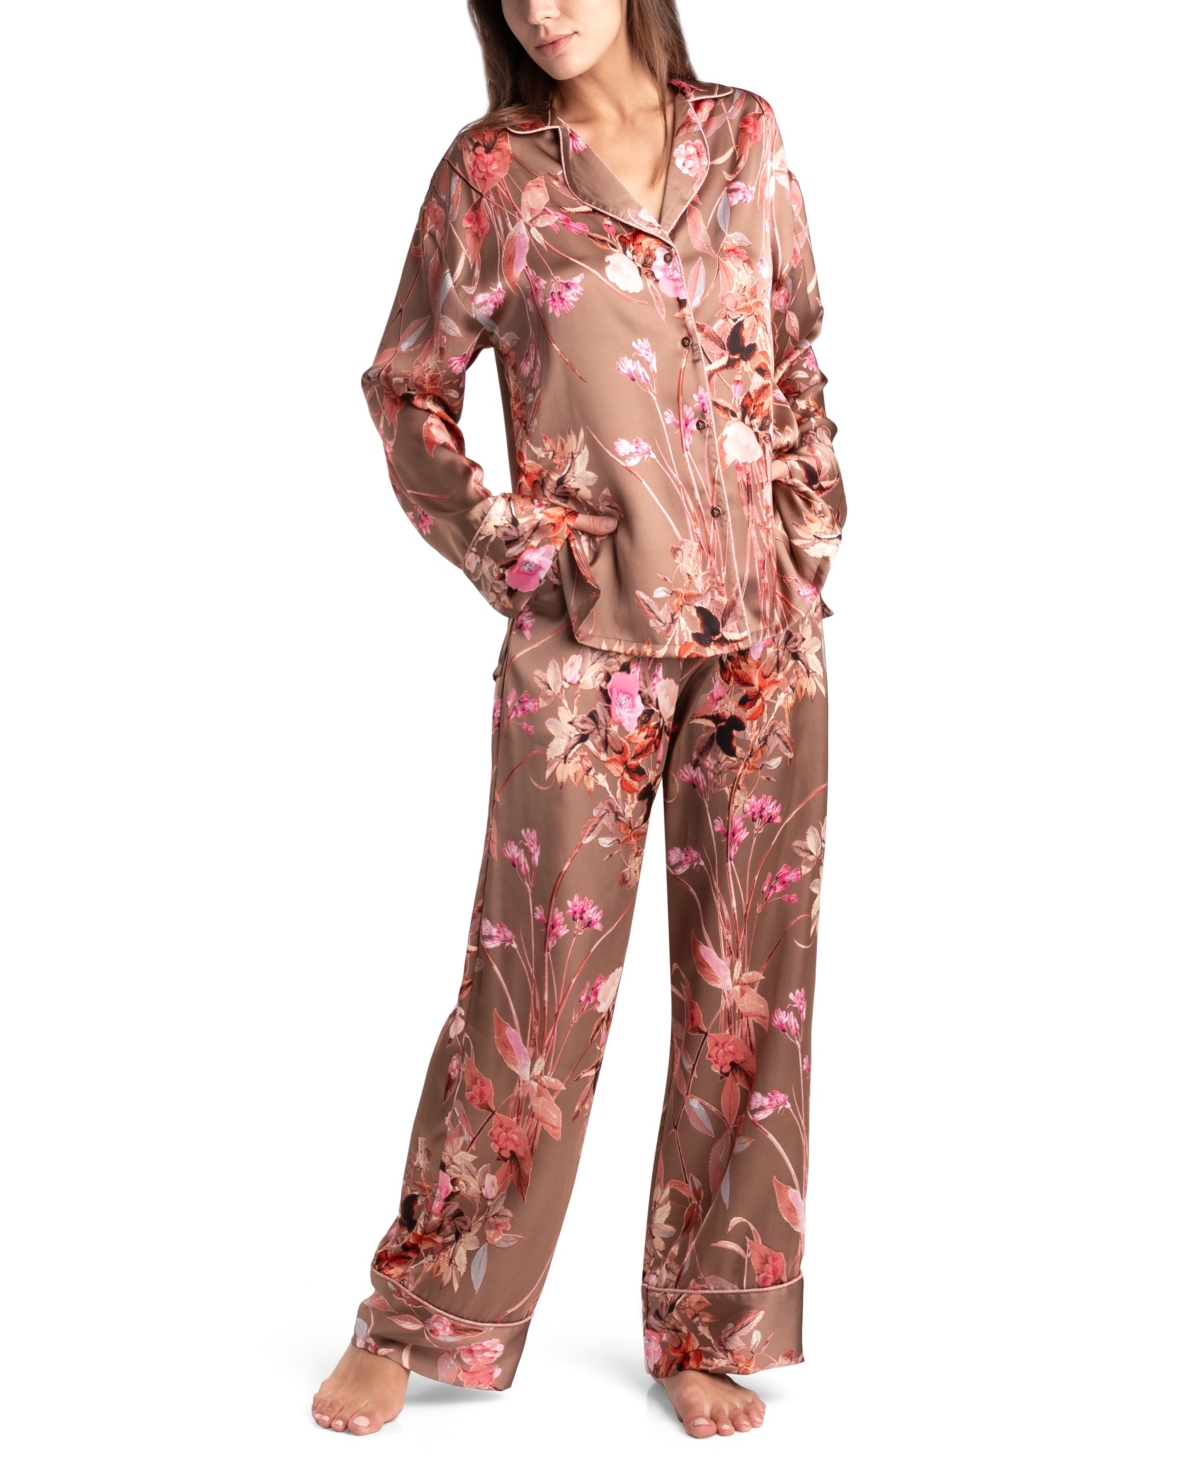 Women's Lingerie Melodi Satin 2 Piece Pajama Set - Taupe